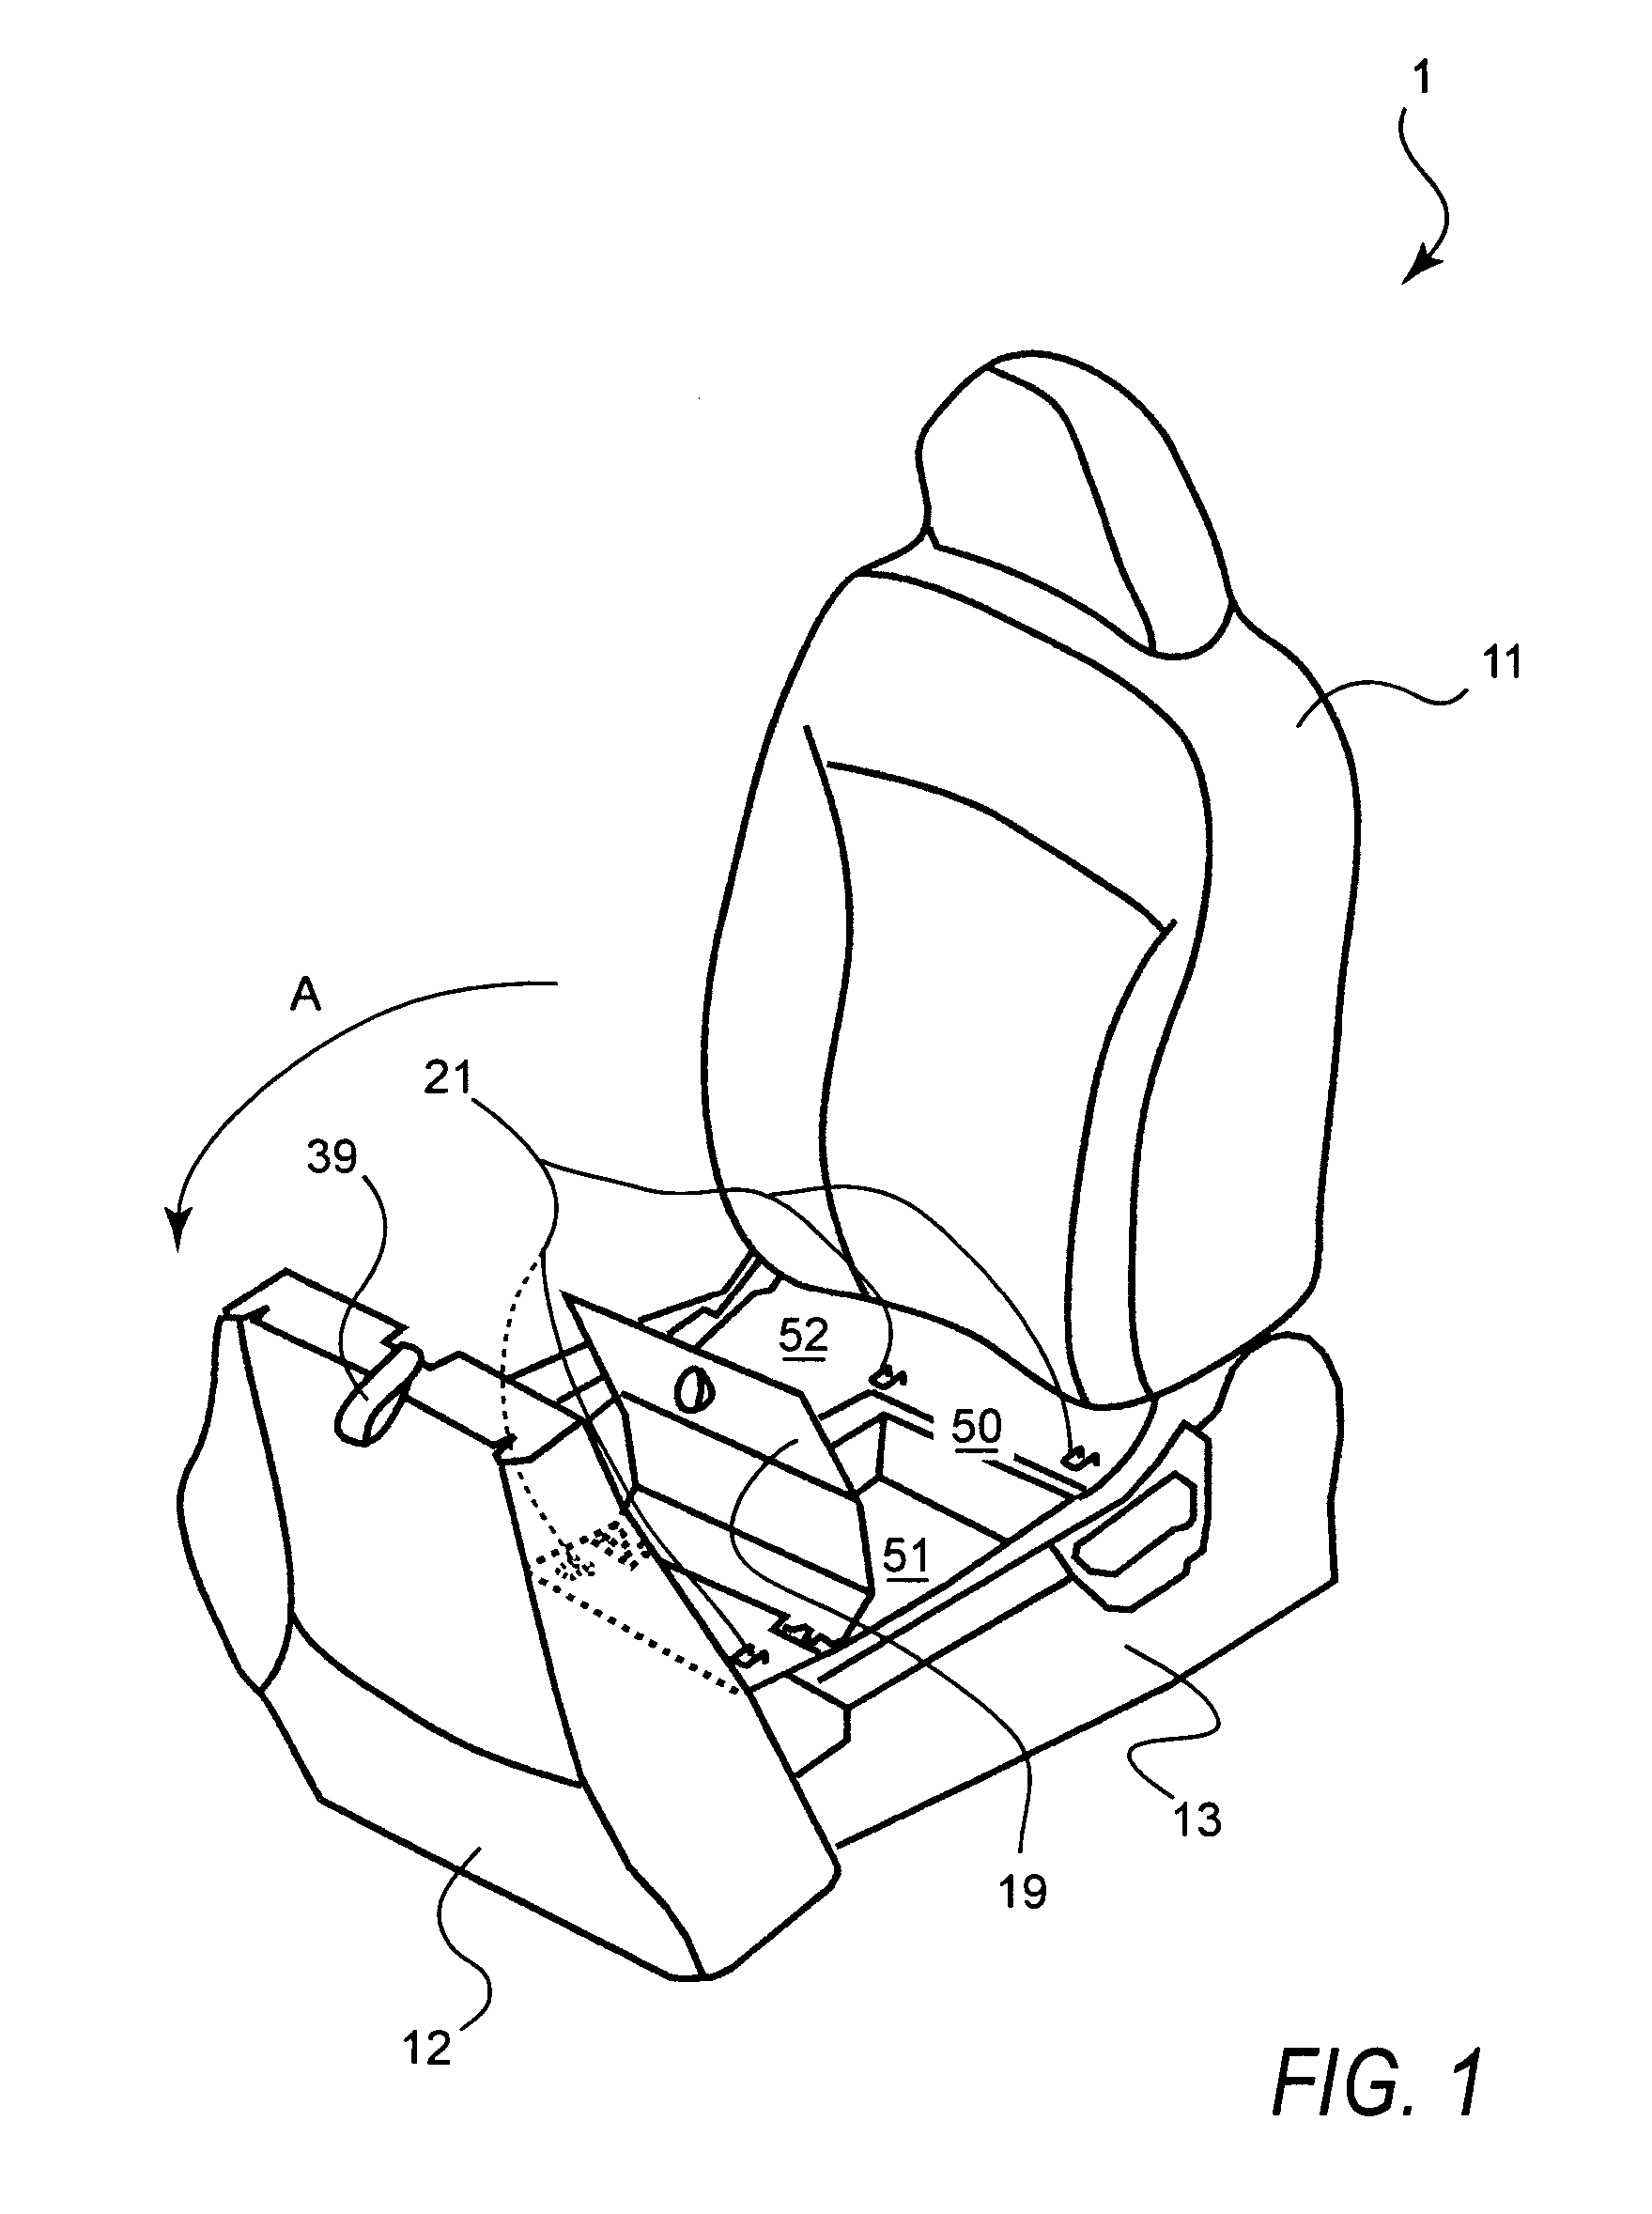 Vehicular under-seat compartment mechanism